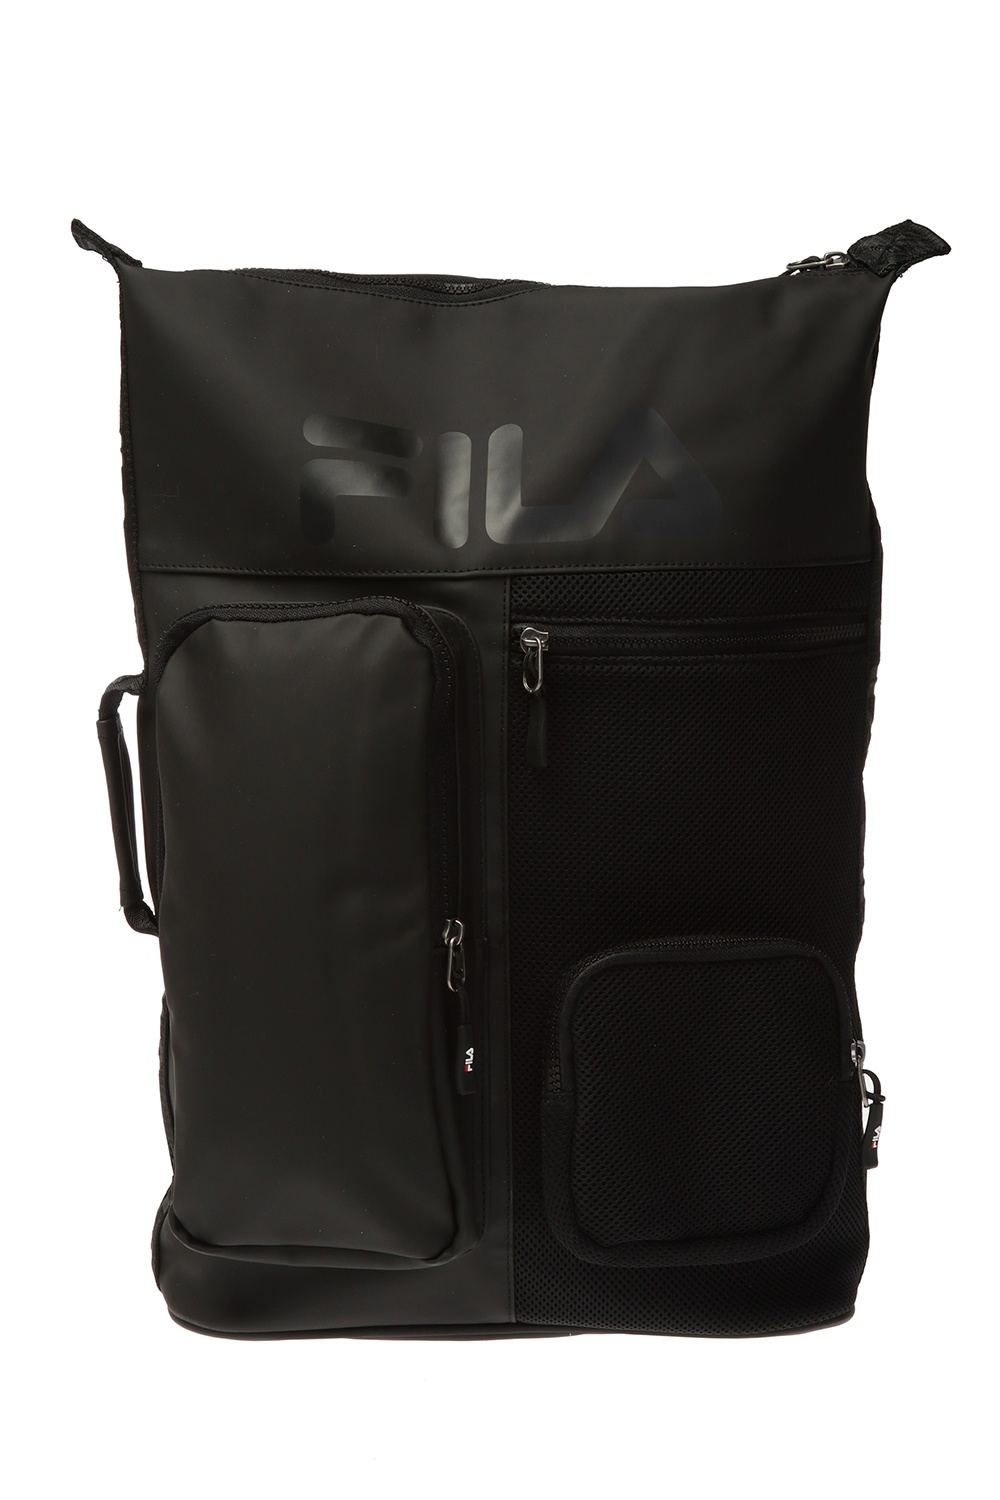 fila unisex black backpack